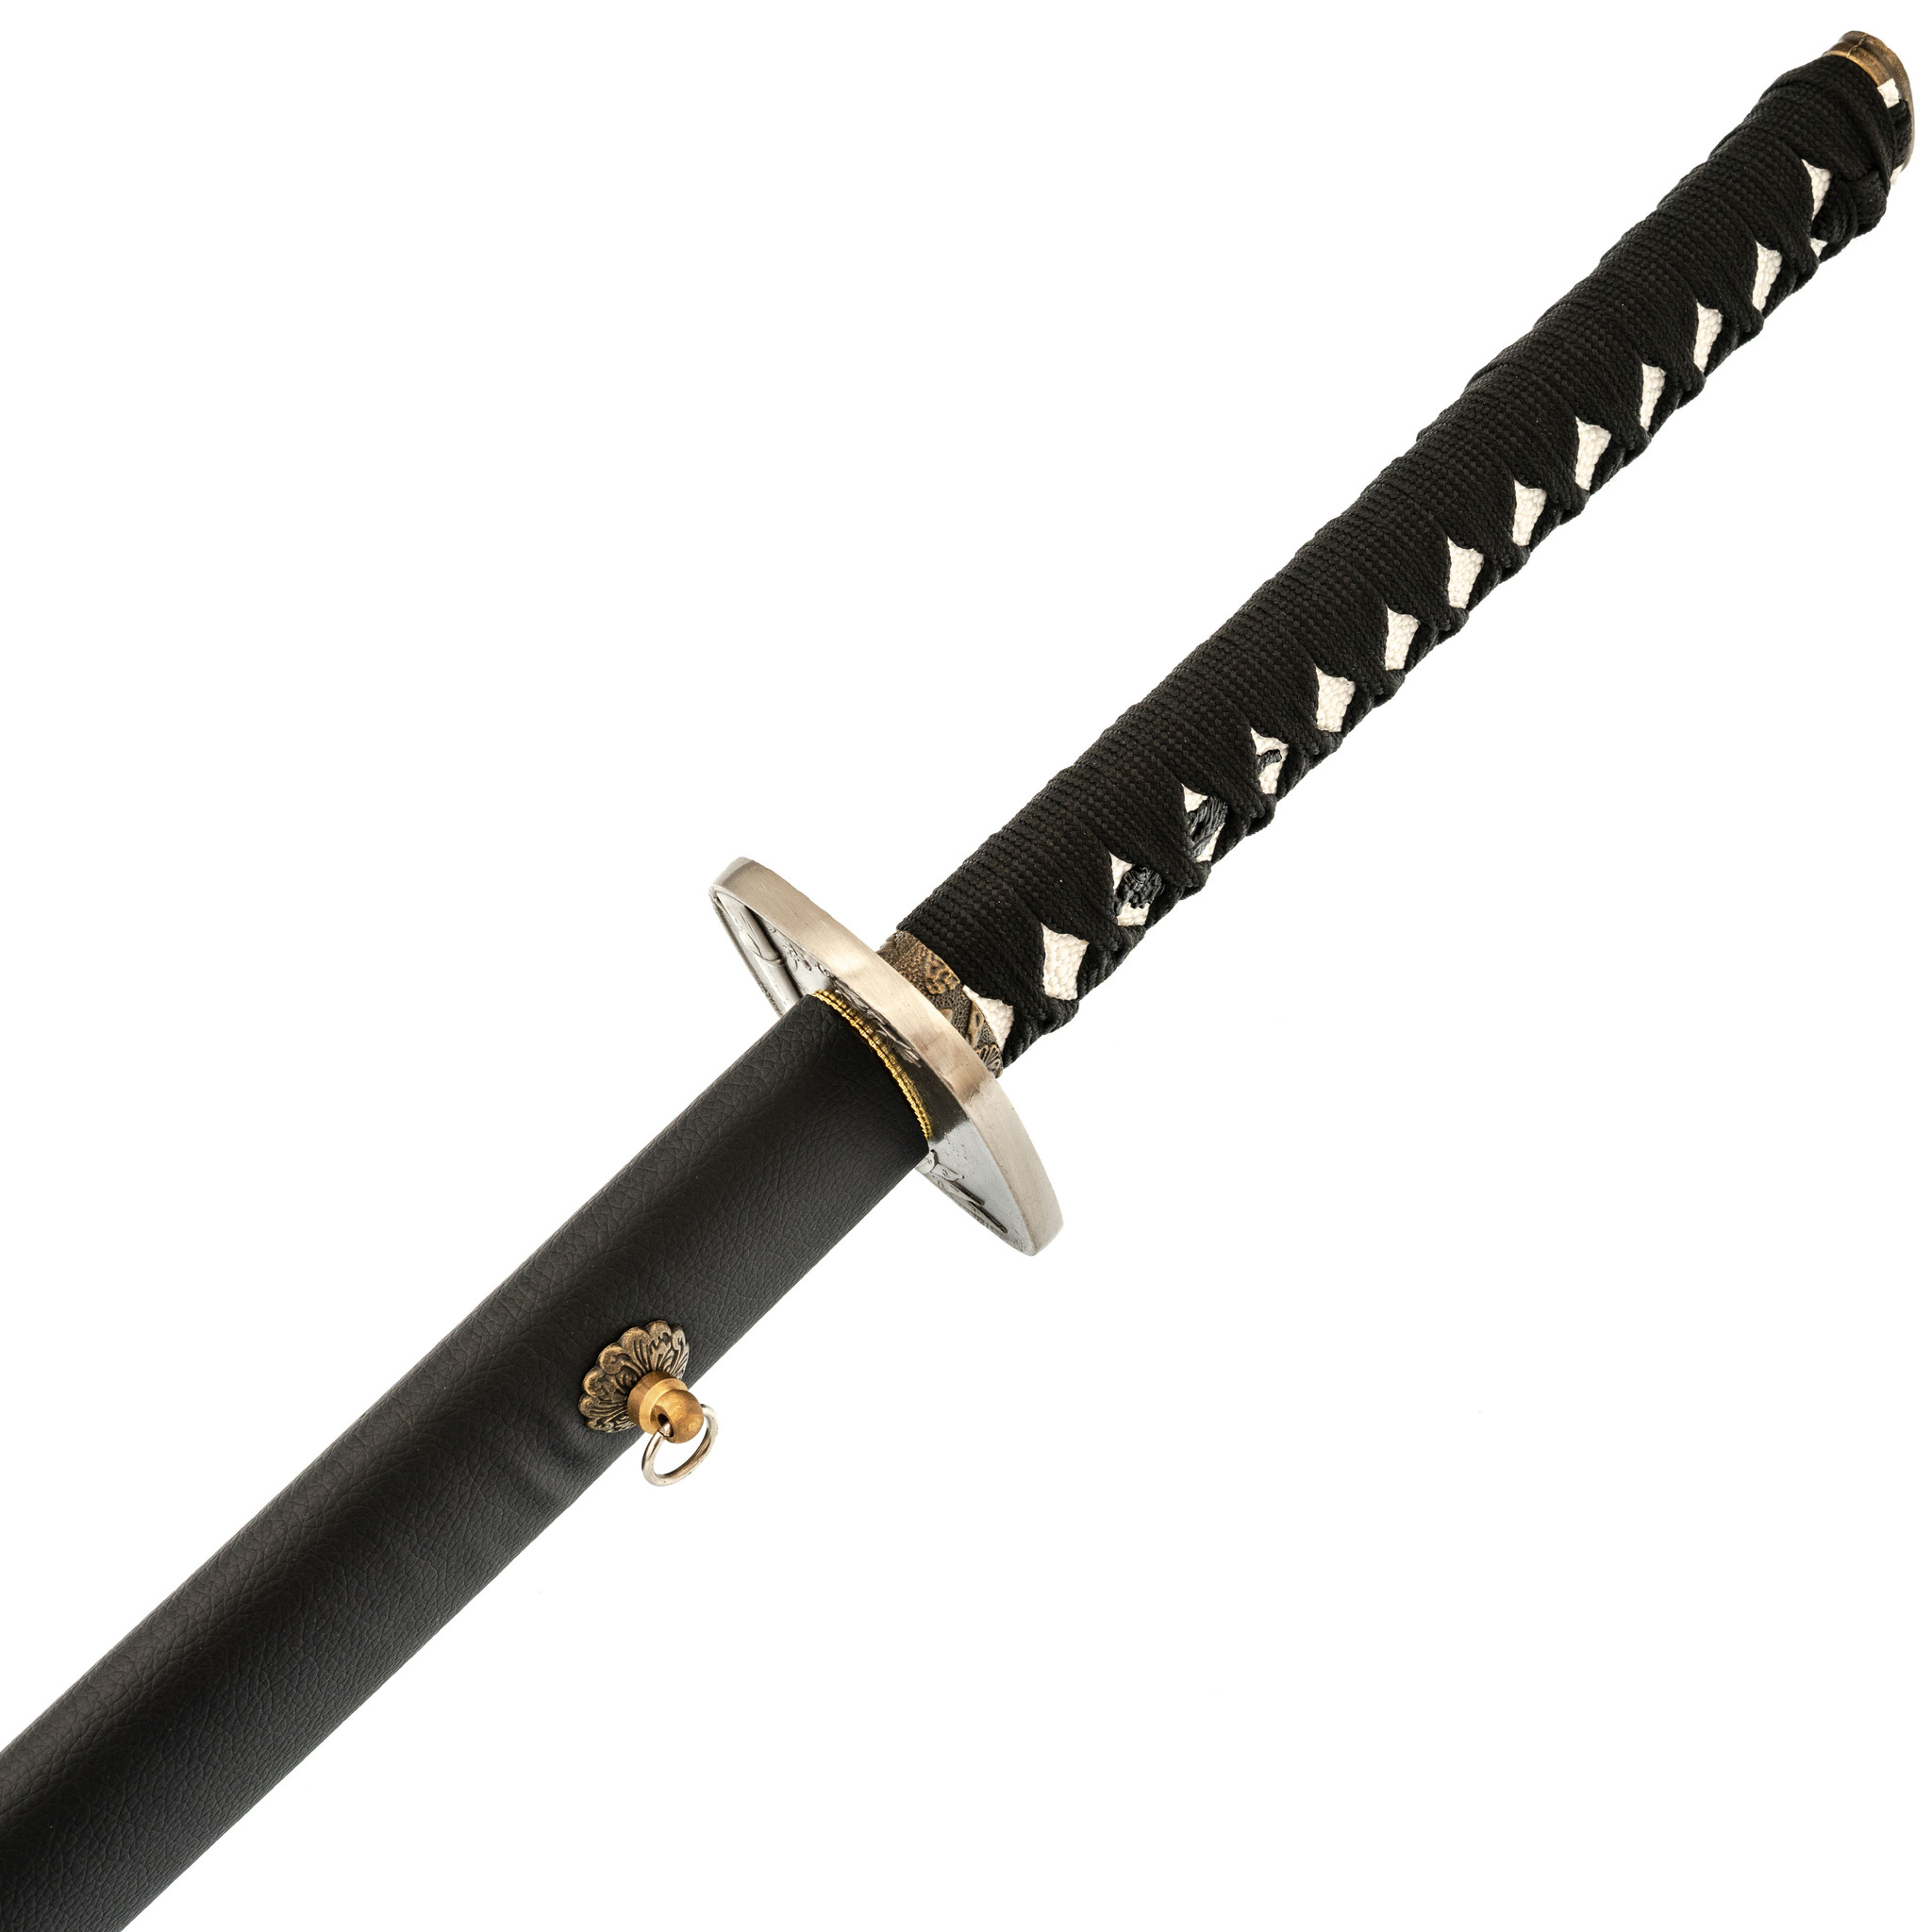 muramasa sword sephiroth